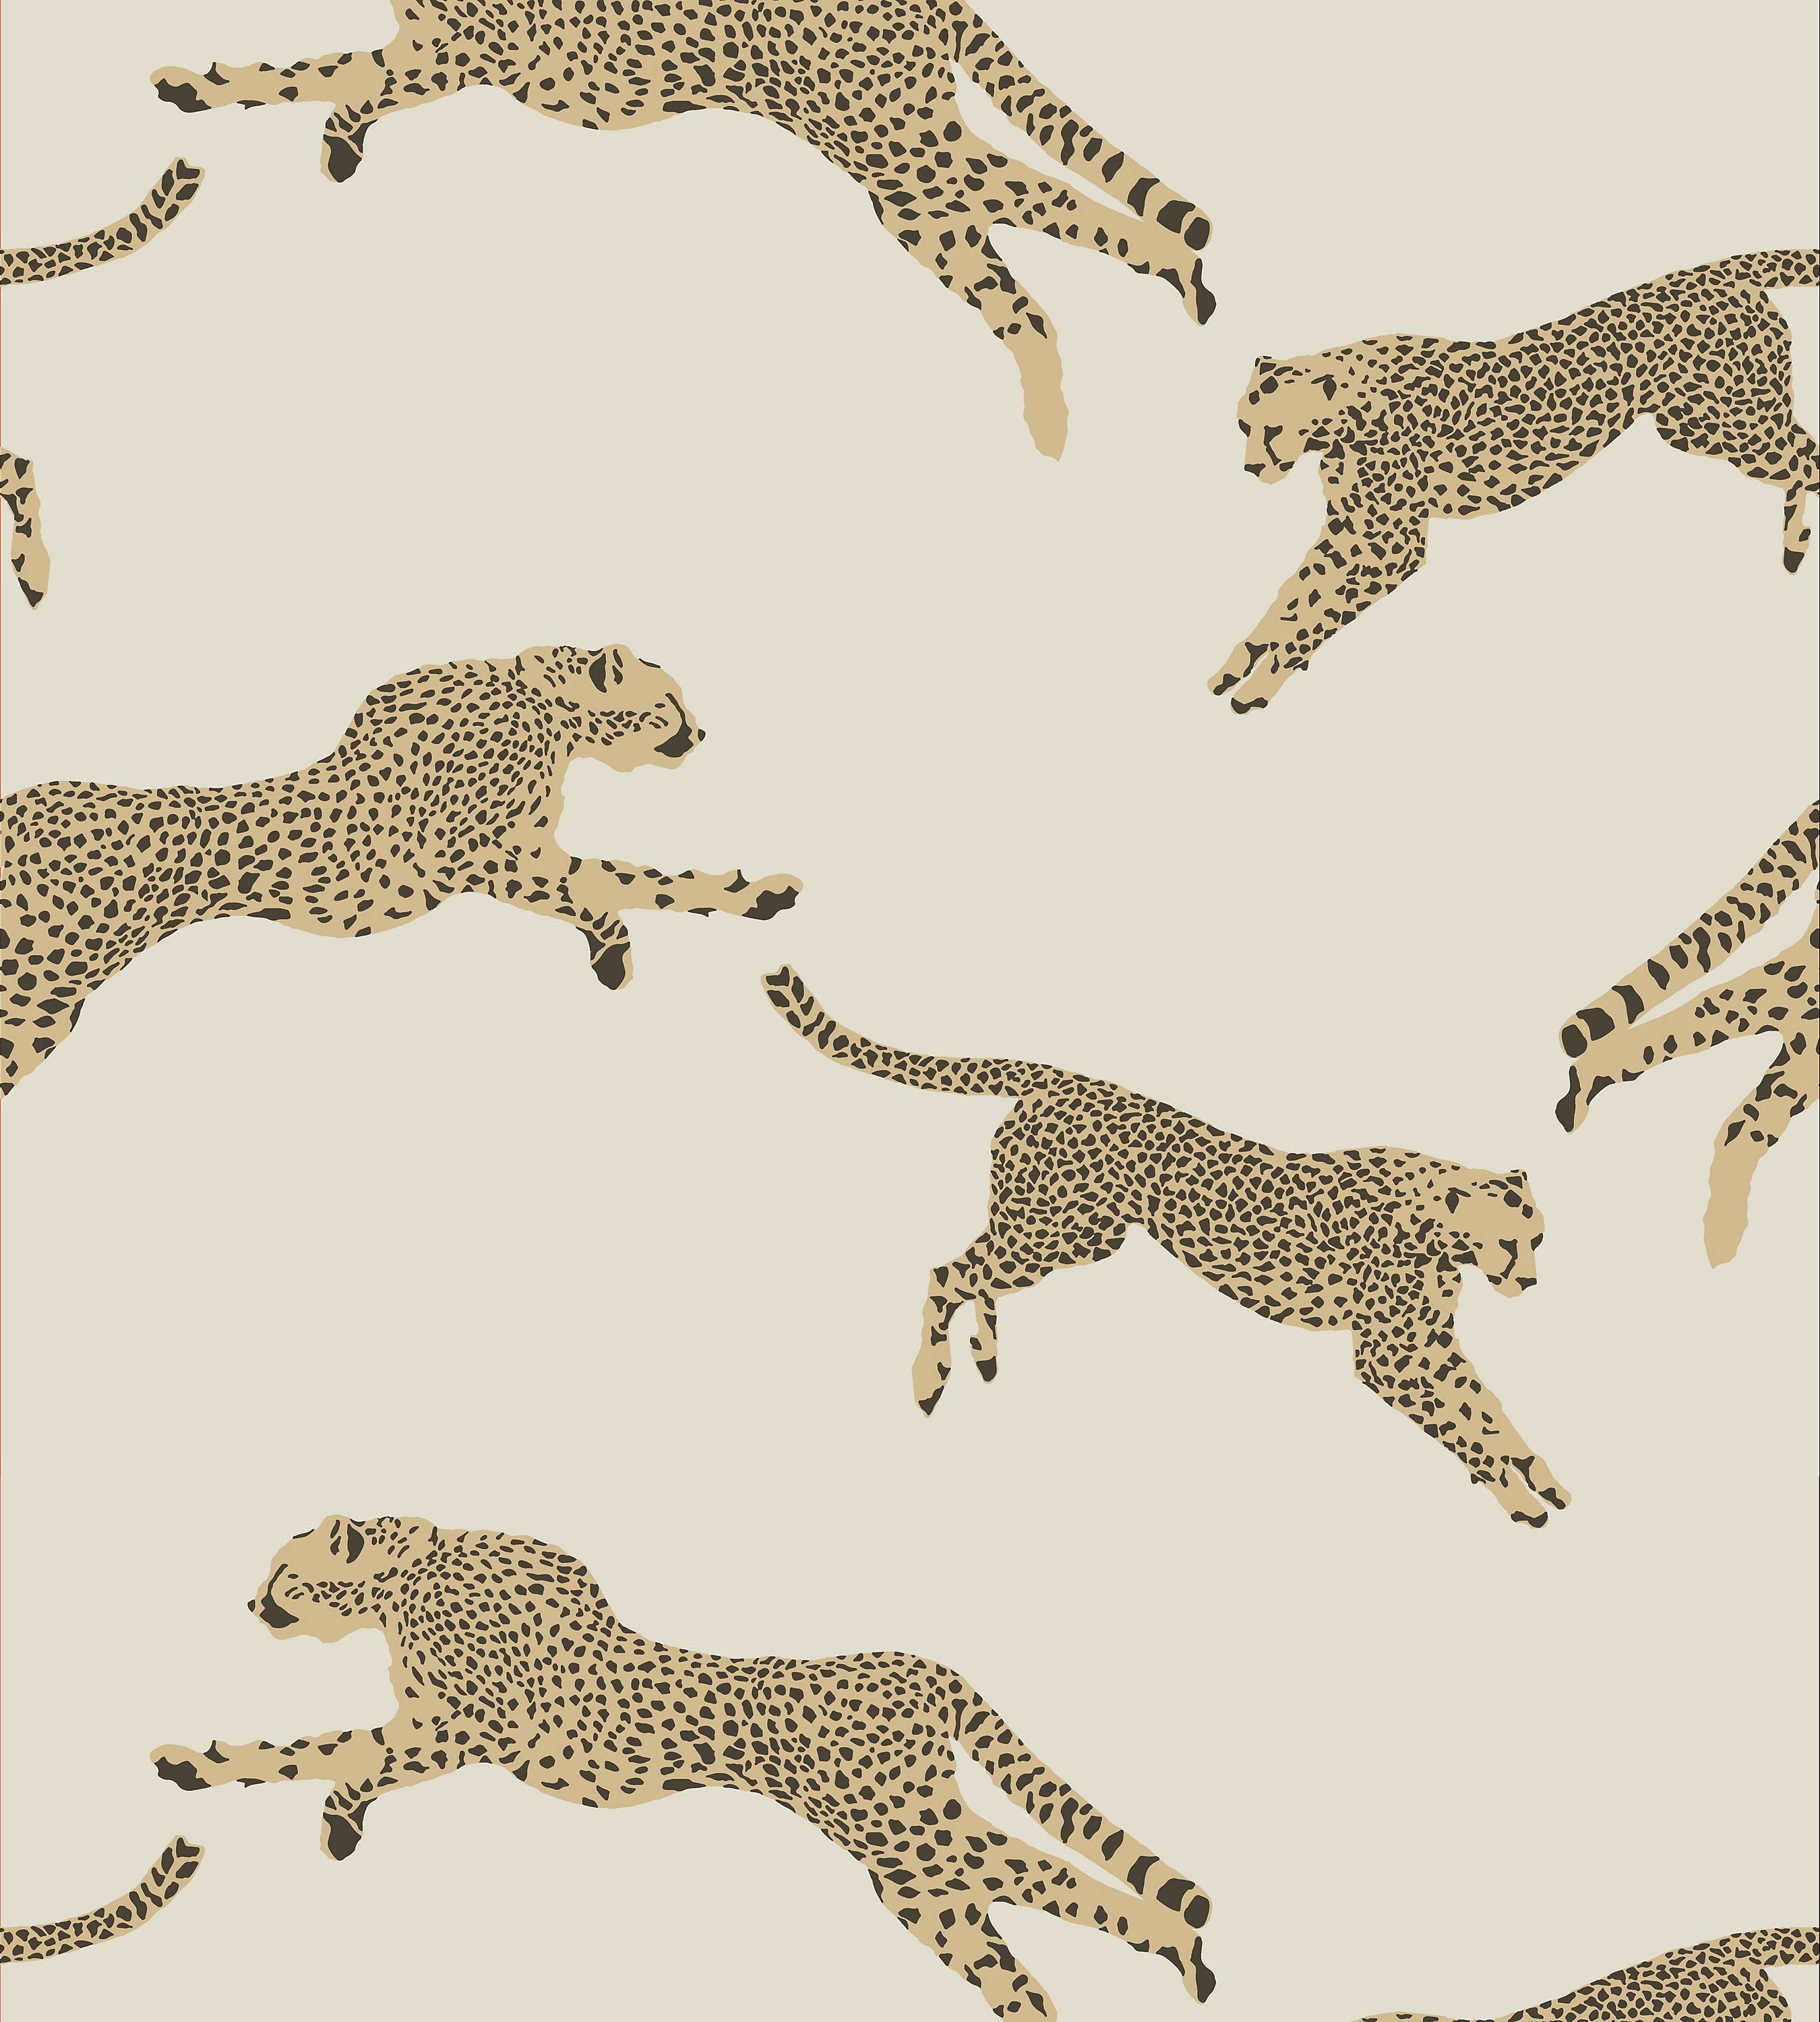  Leopardenmuster Hintergrundbild 2700x3000. SC 0001WP88449. Leaping Cheetah Dune